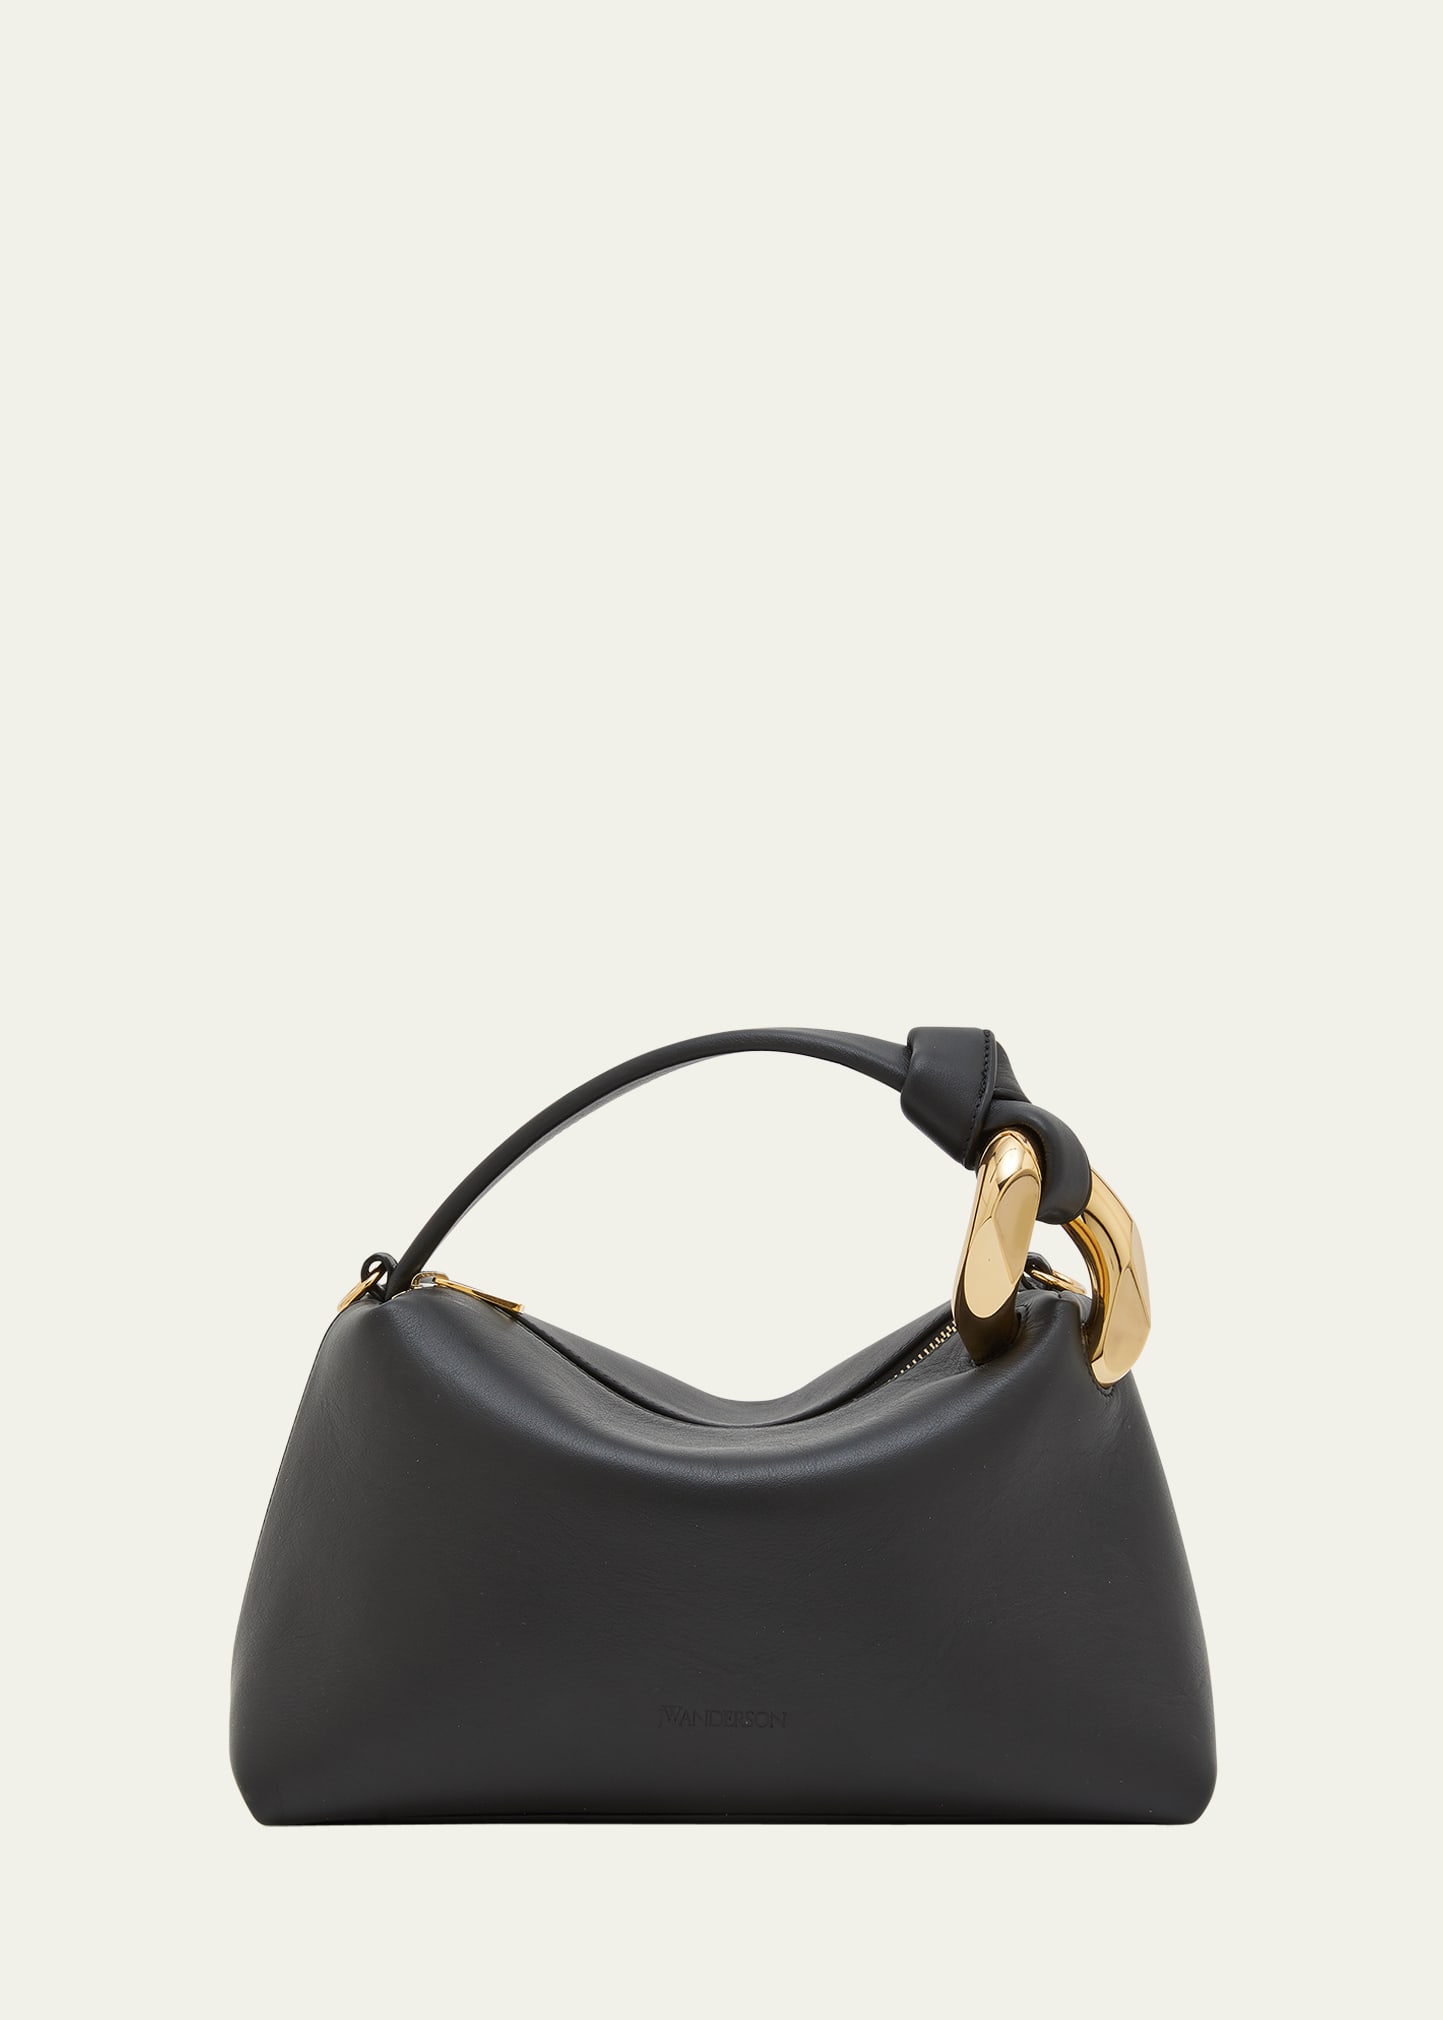 Luxurys Bag Designers Bags Sunset Bag Handbag Purses Woman Fashion Clutch  Purse Chain Lady Crossbody Shoulder Bag Evening Bags From Designerbag033,  $51.82